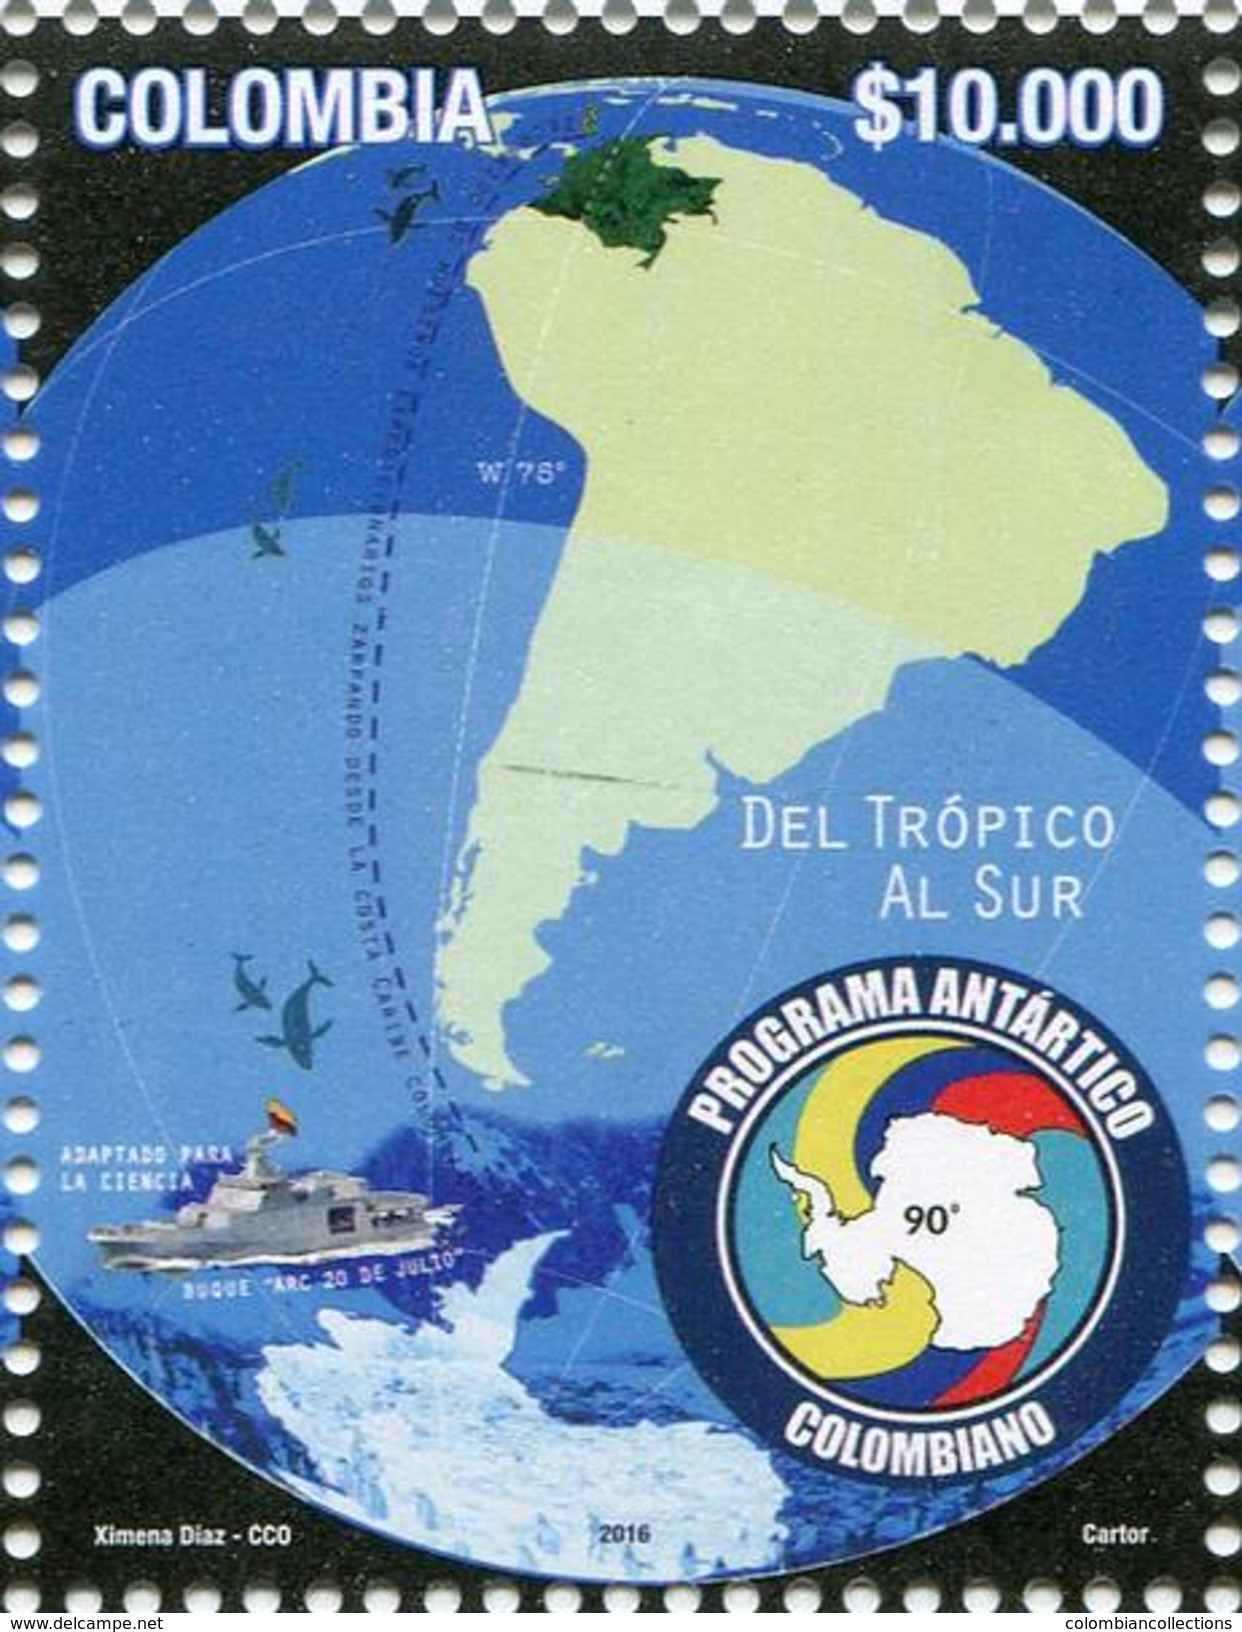 Lote 2016-14, Colombia, 2016, Sello, Stamp, Programa Antartico Colombiano, Antarctica, Boat, Penguin - Kolumbien